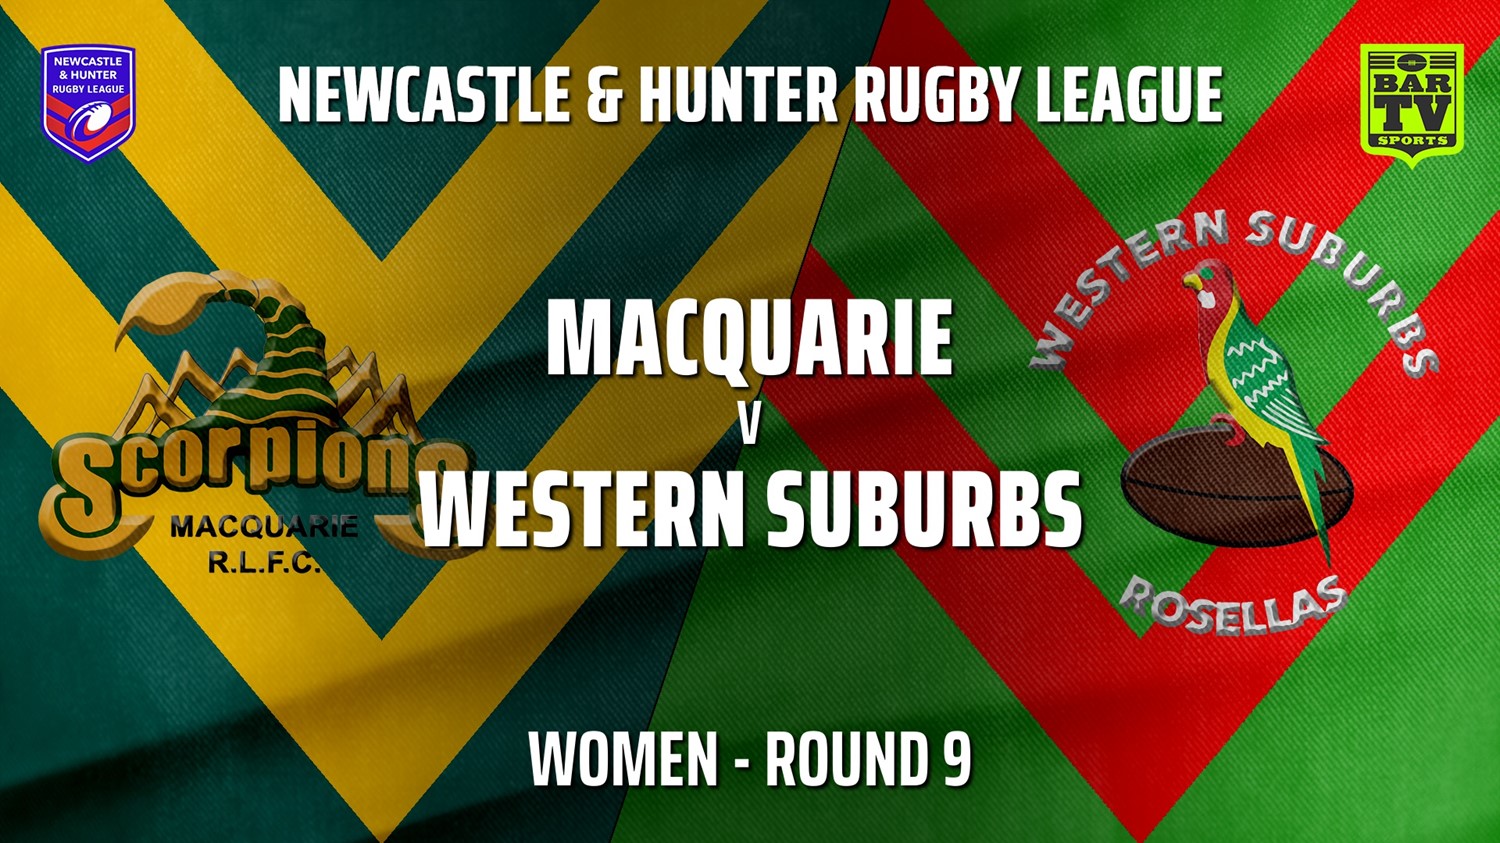 210605-NHRL Round 9 - Women - Macquarie Scorpions v Western Suburbs Rosellas Slate Image